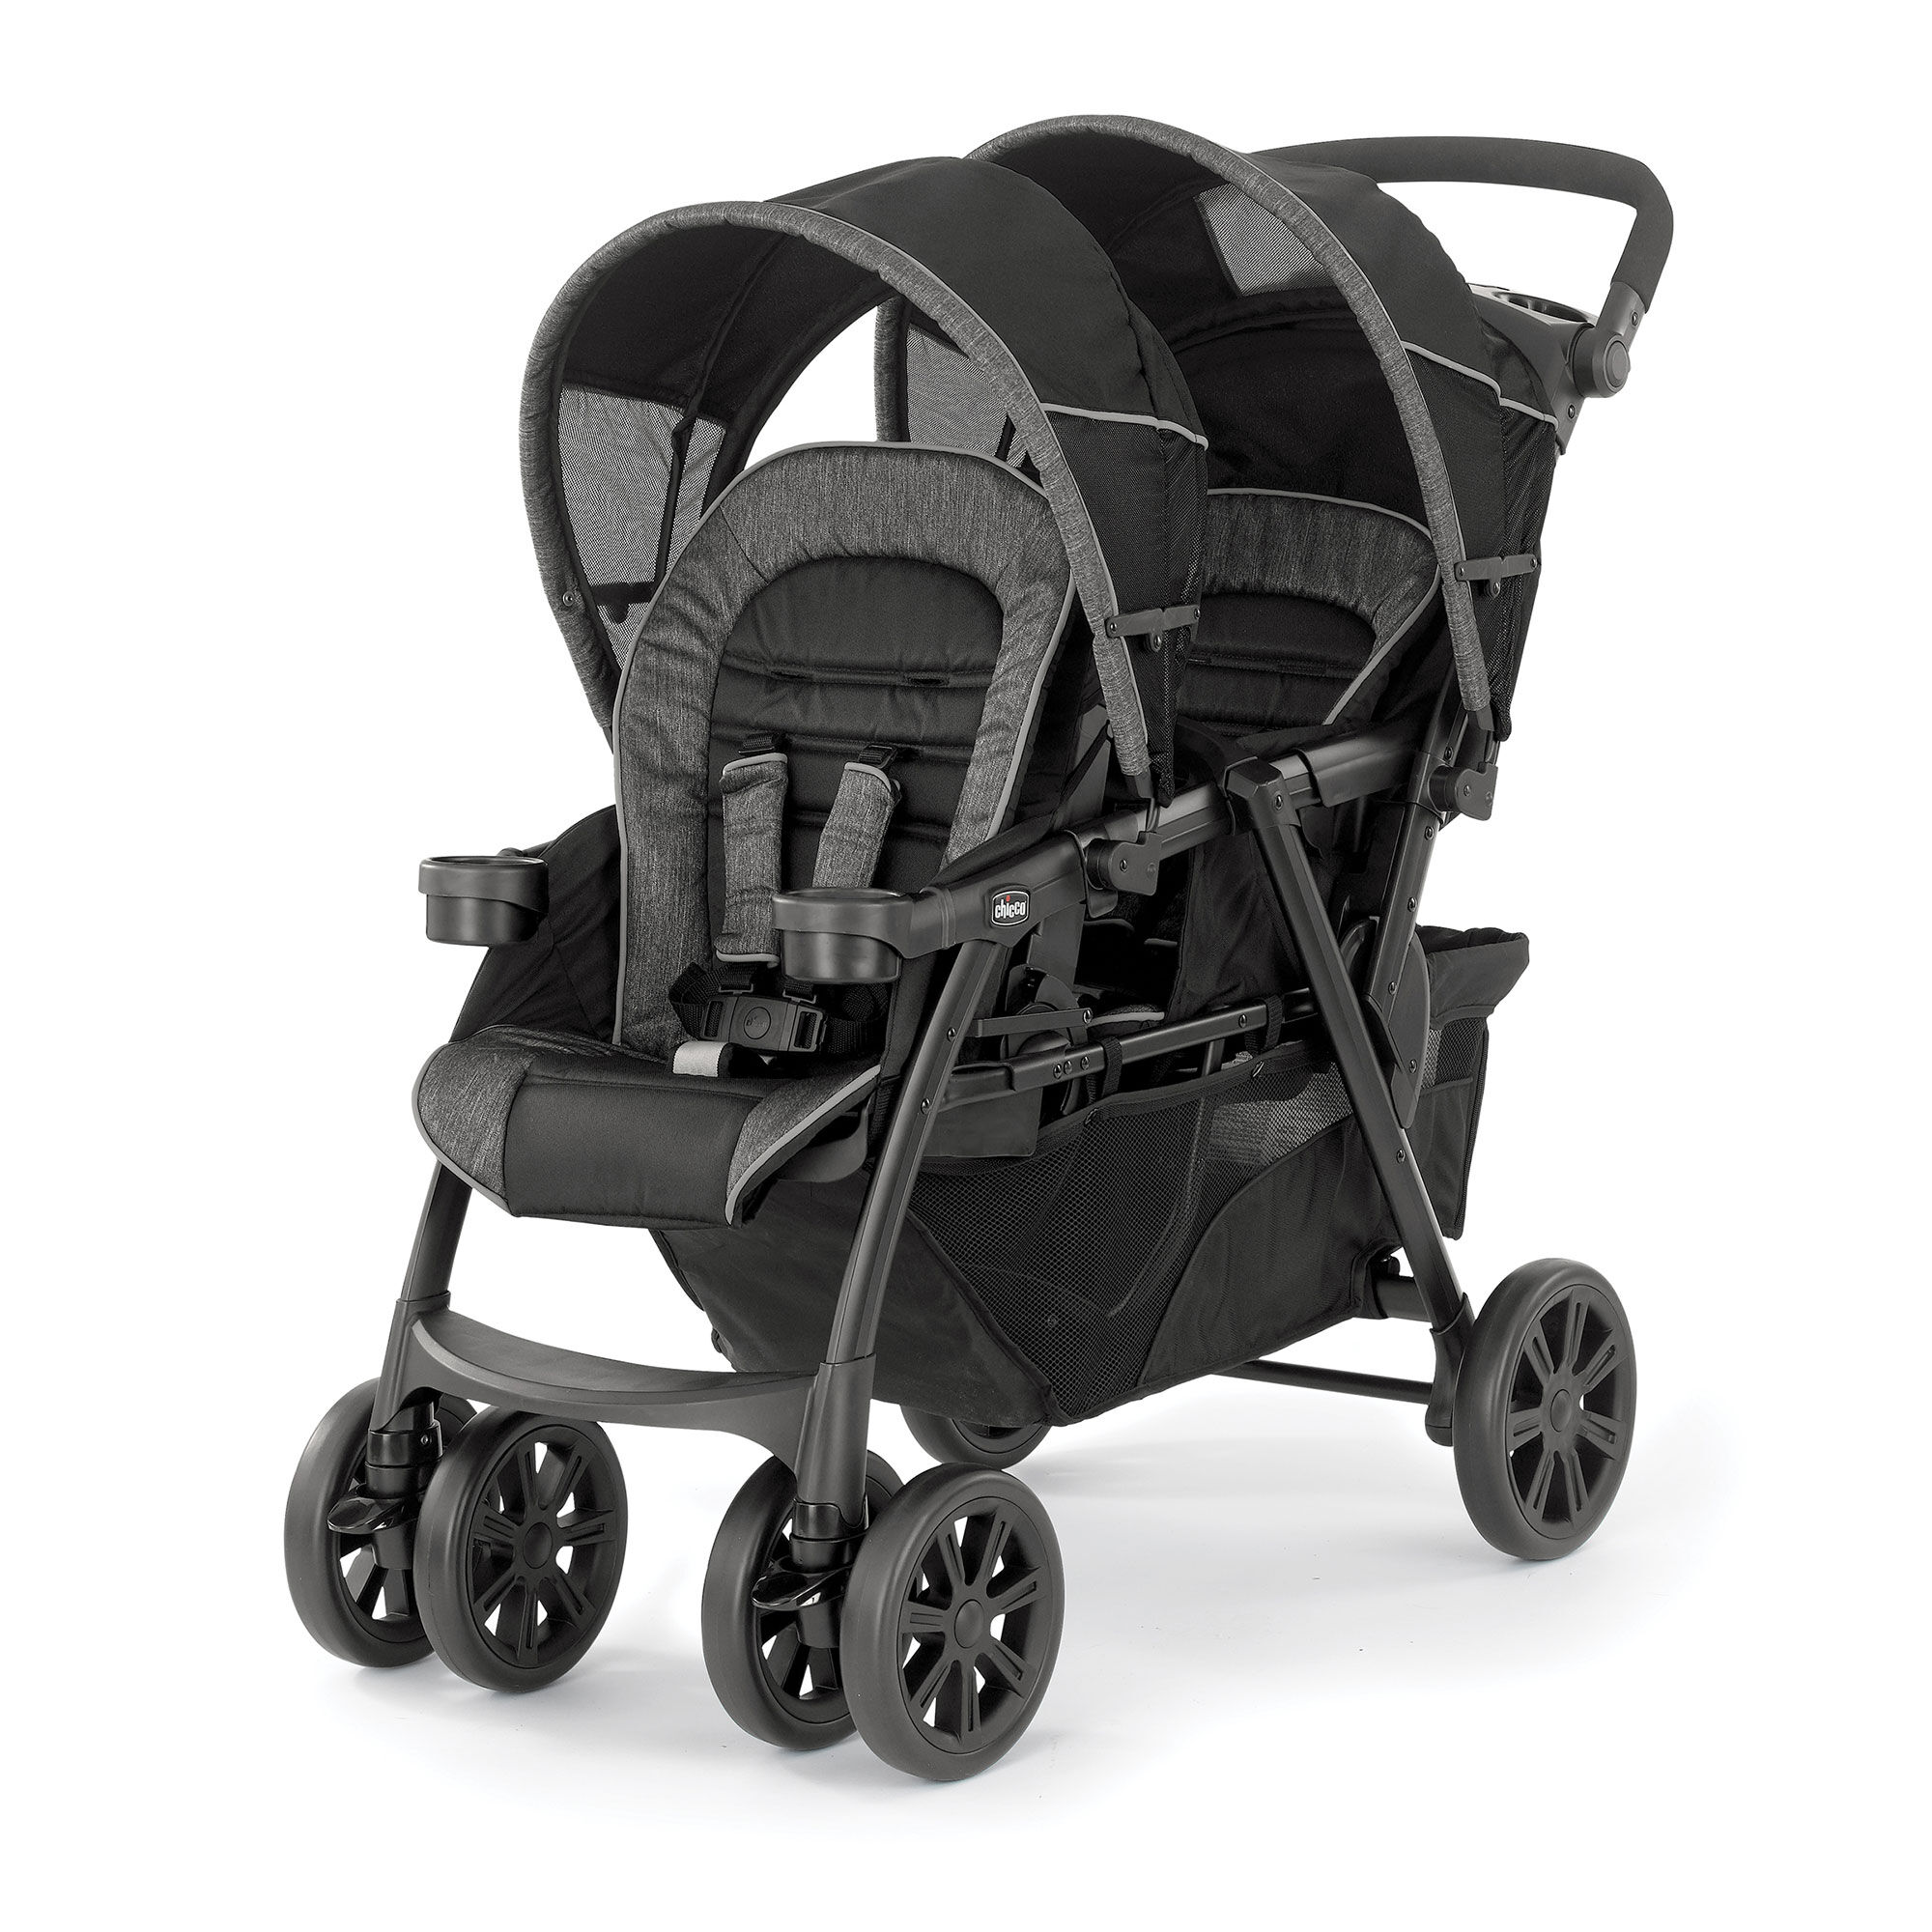 pram stroller - Baby Gear Best Prices and Online Promos - Babies